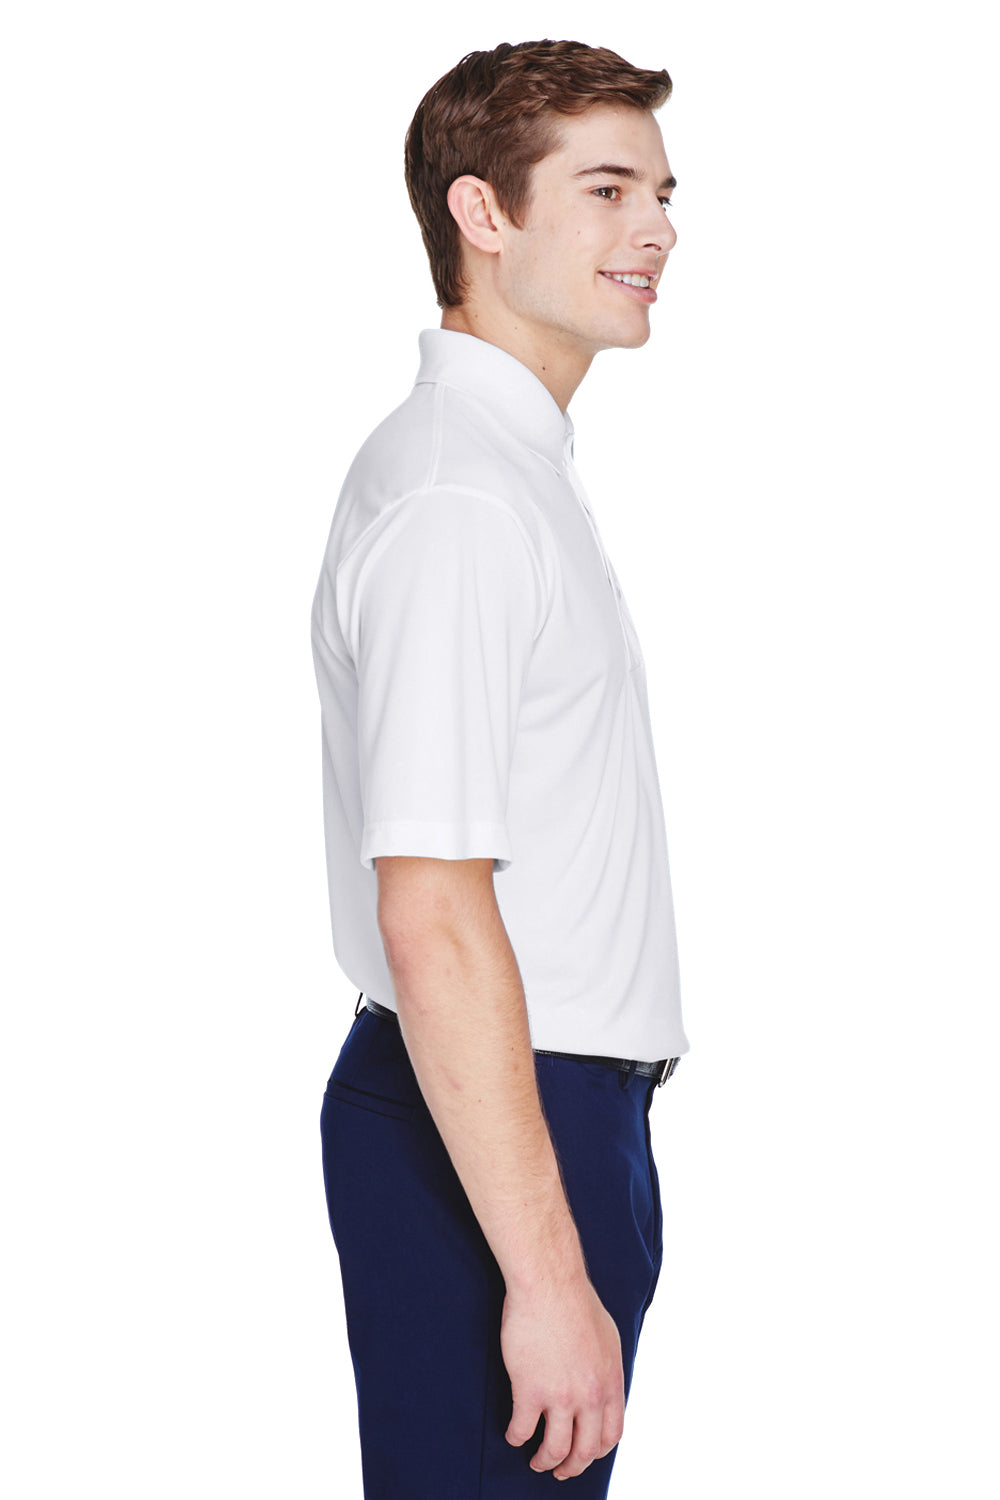 UltraClub 8610 Mens Cool & Dry 8 Star Elite Performance Moisture Wicking Short Sleeve Polo Shirt White Side